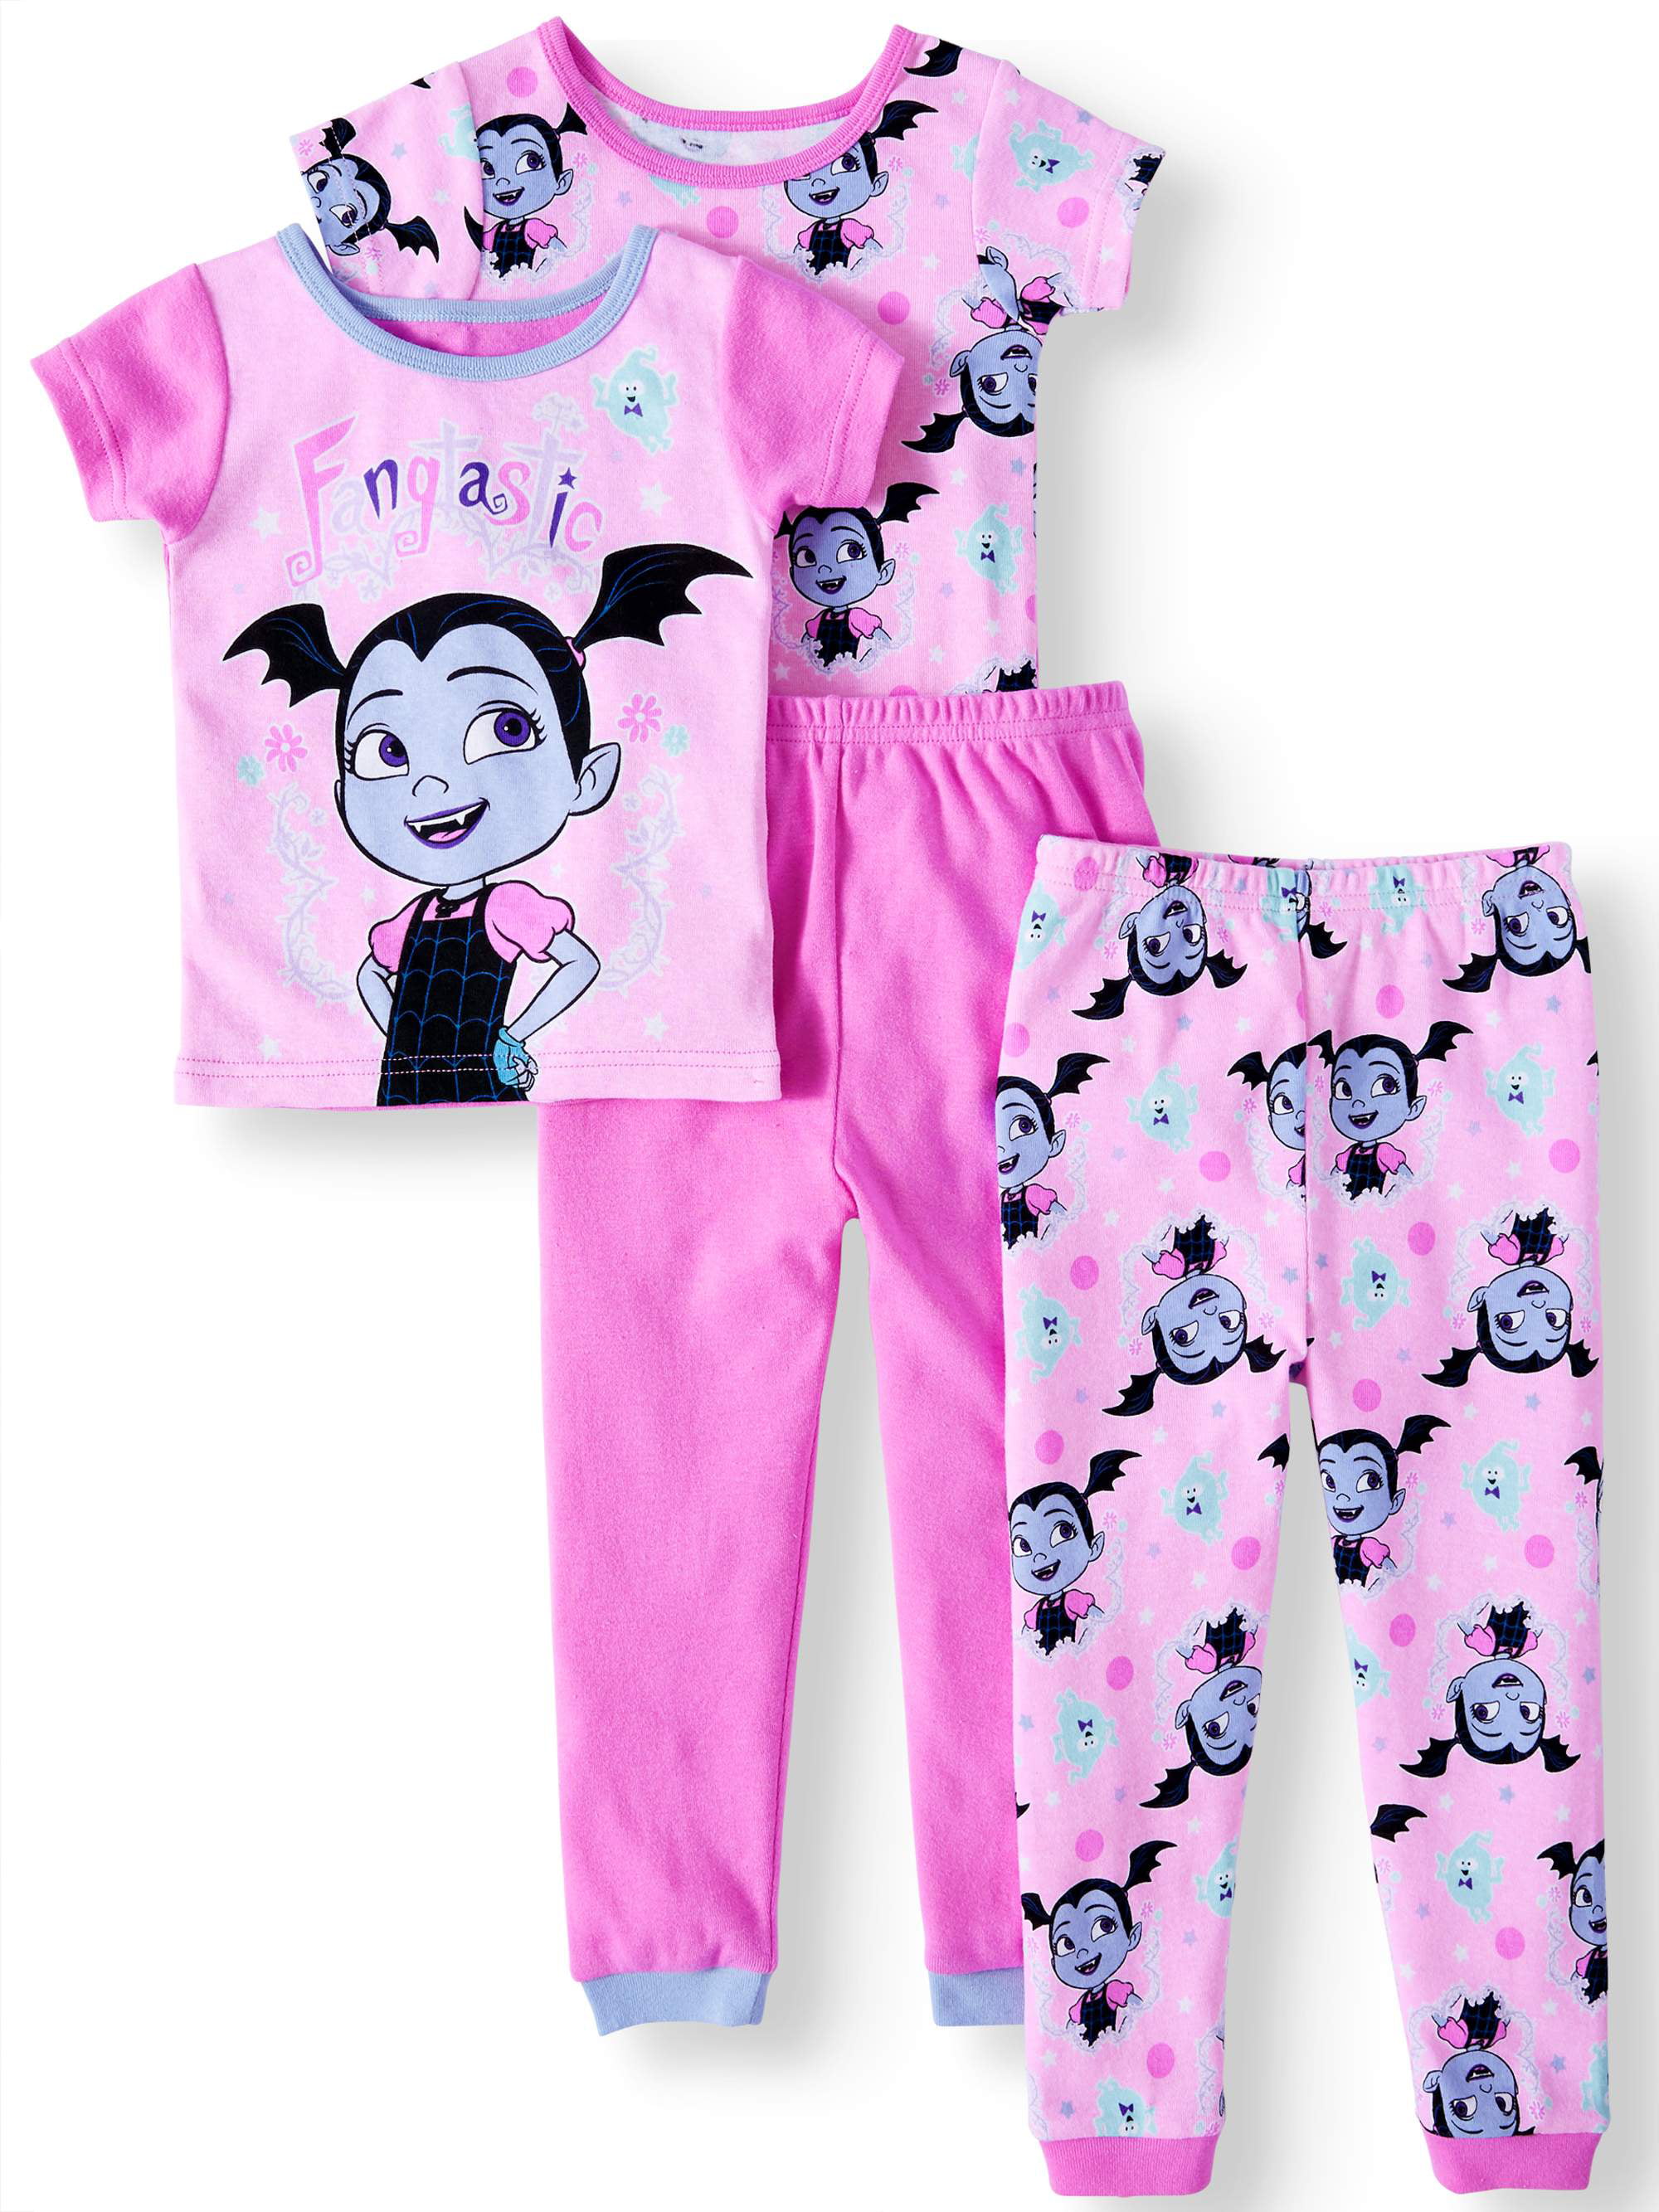 Personalised Rock Star Pyjamas Toddler Pyjamas Girls Pjs Boys Christmas Gifts Girls Kids Guitar Music